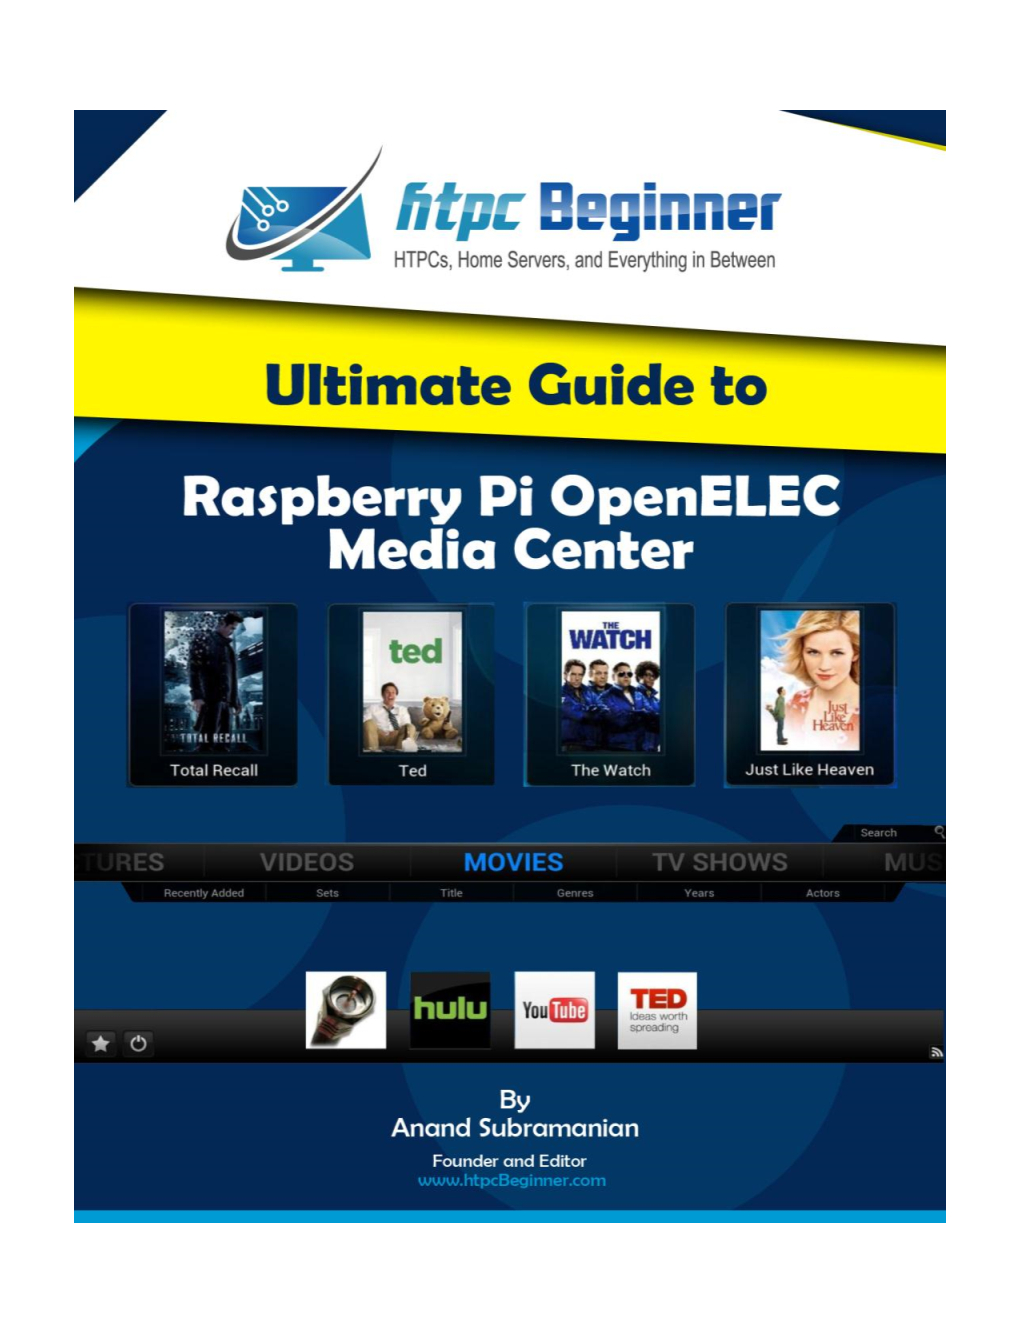 Ultimate Guide to Raspberry Pi Openelec Media Center